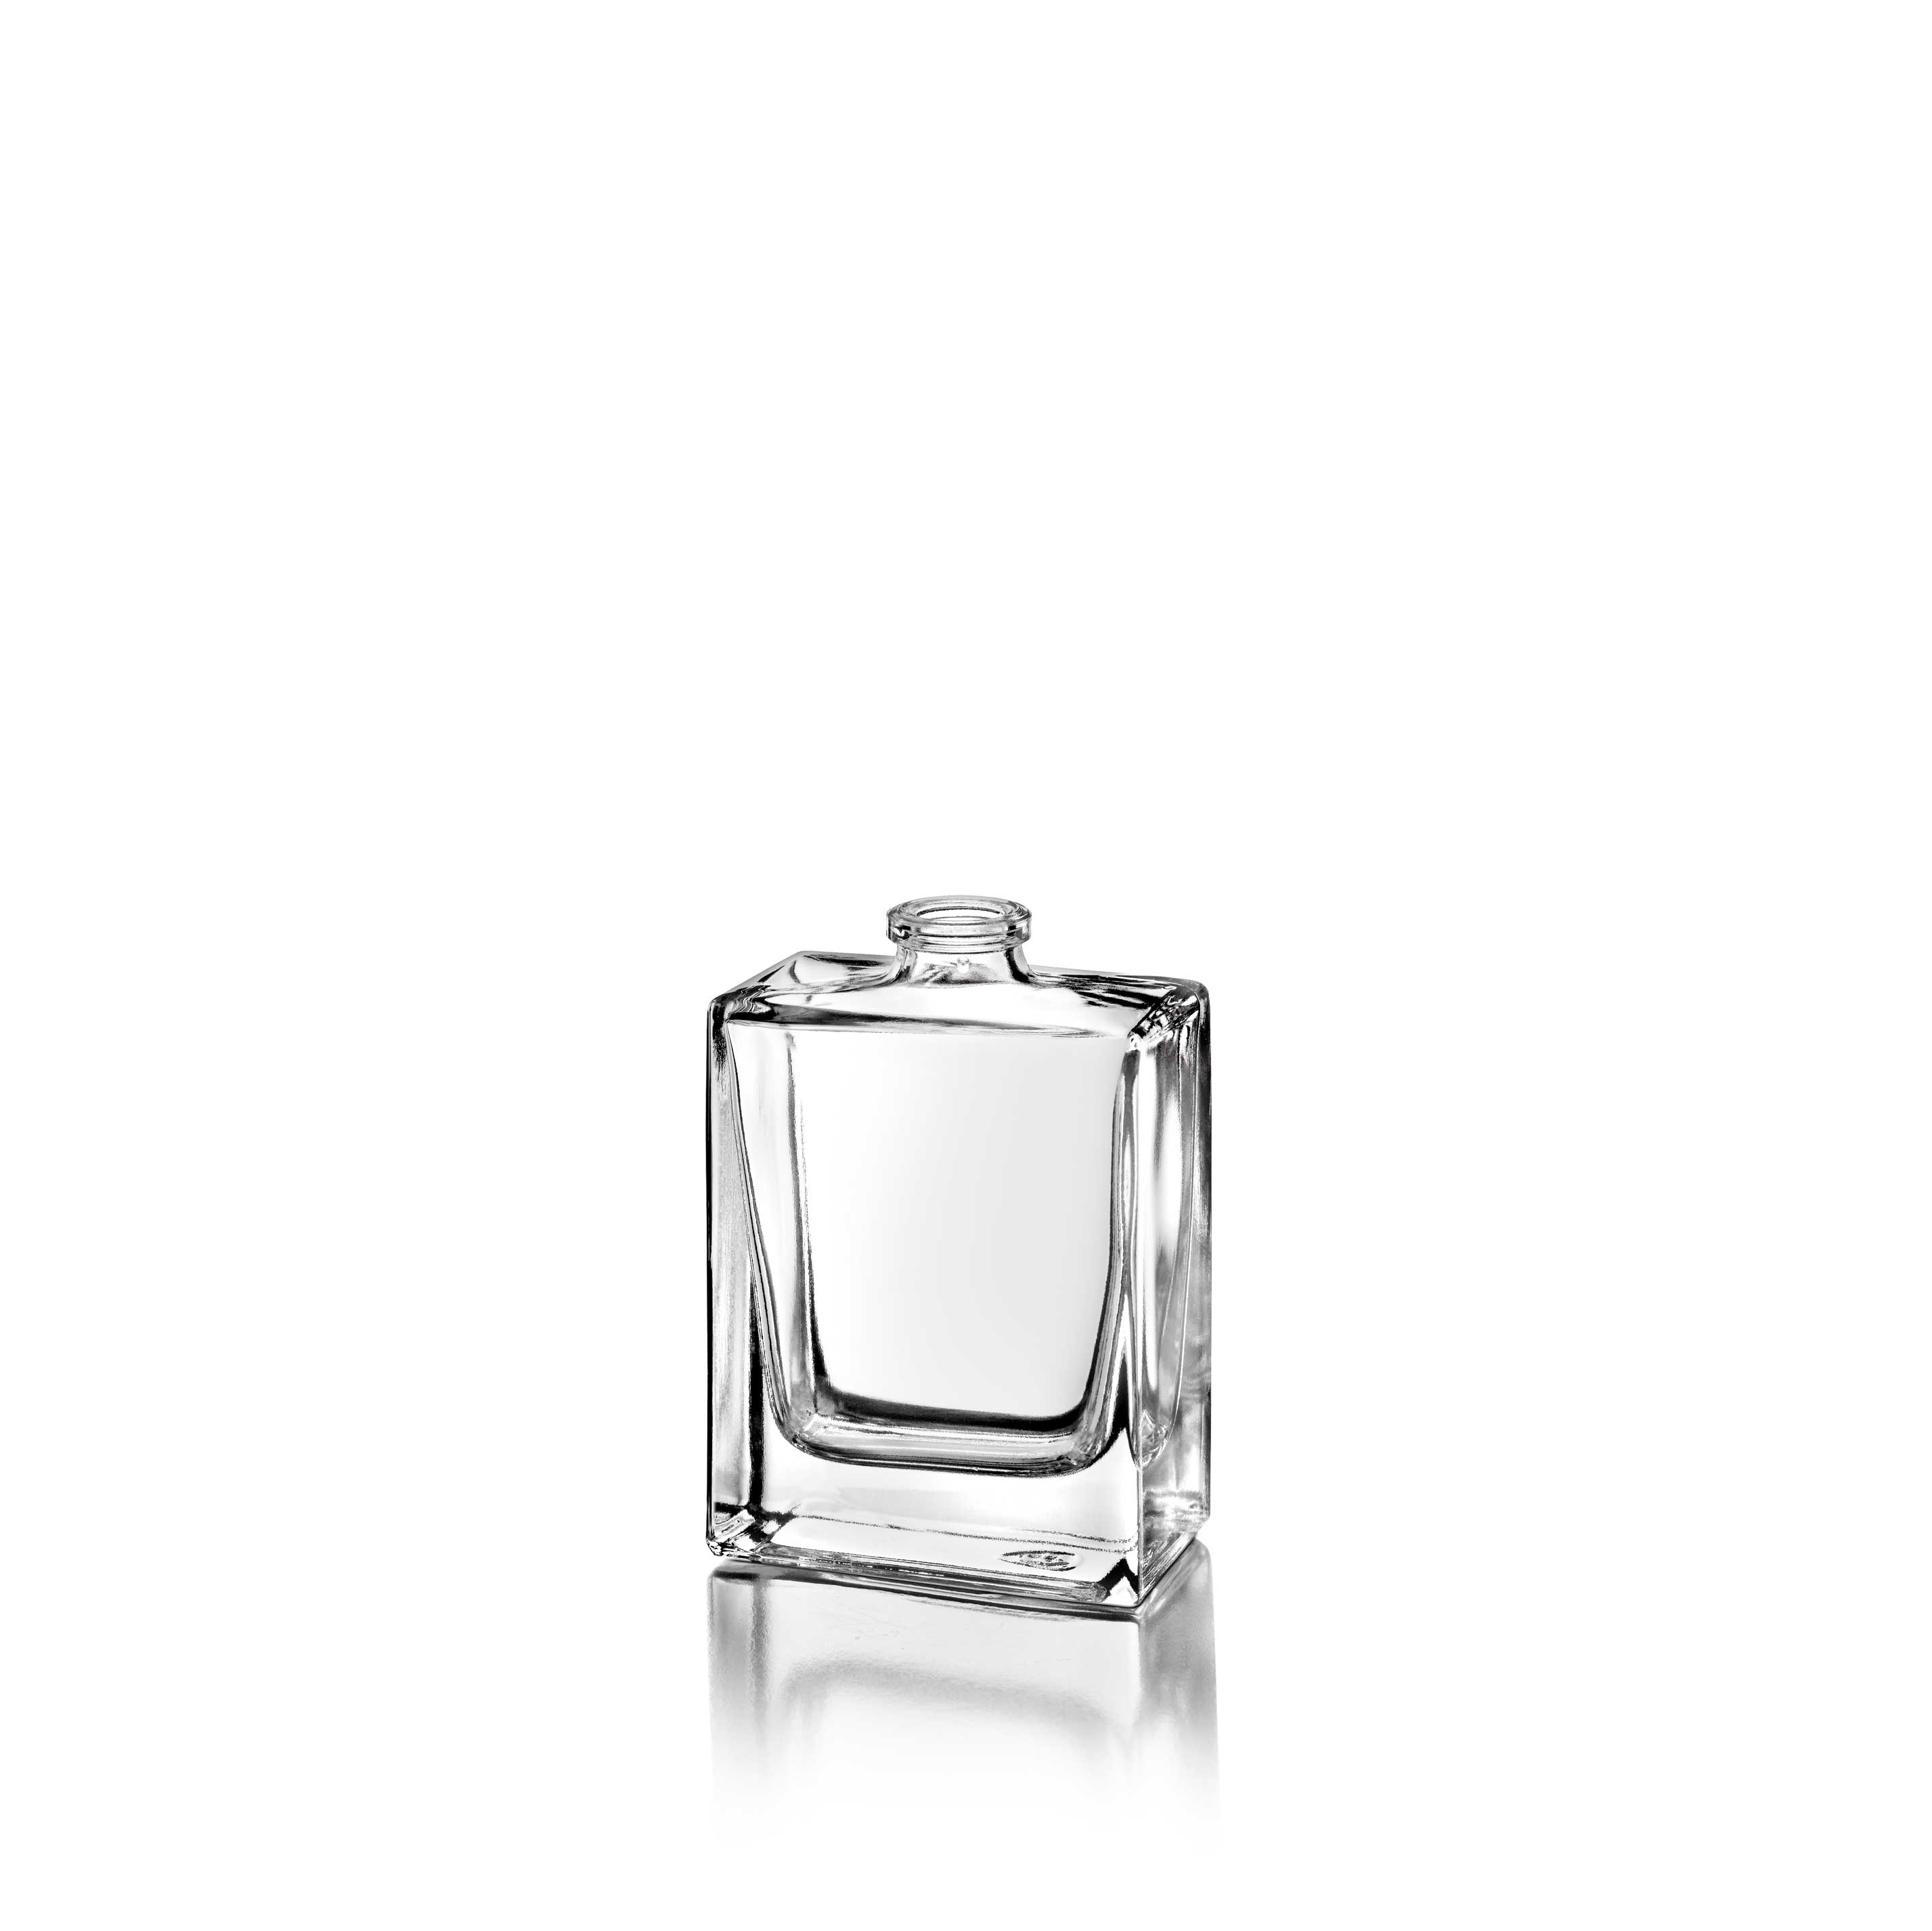 Perfume bottle Victor 30 ml, FEA 15, rectangle, Flint